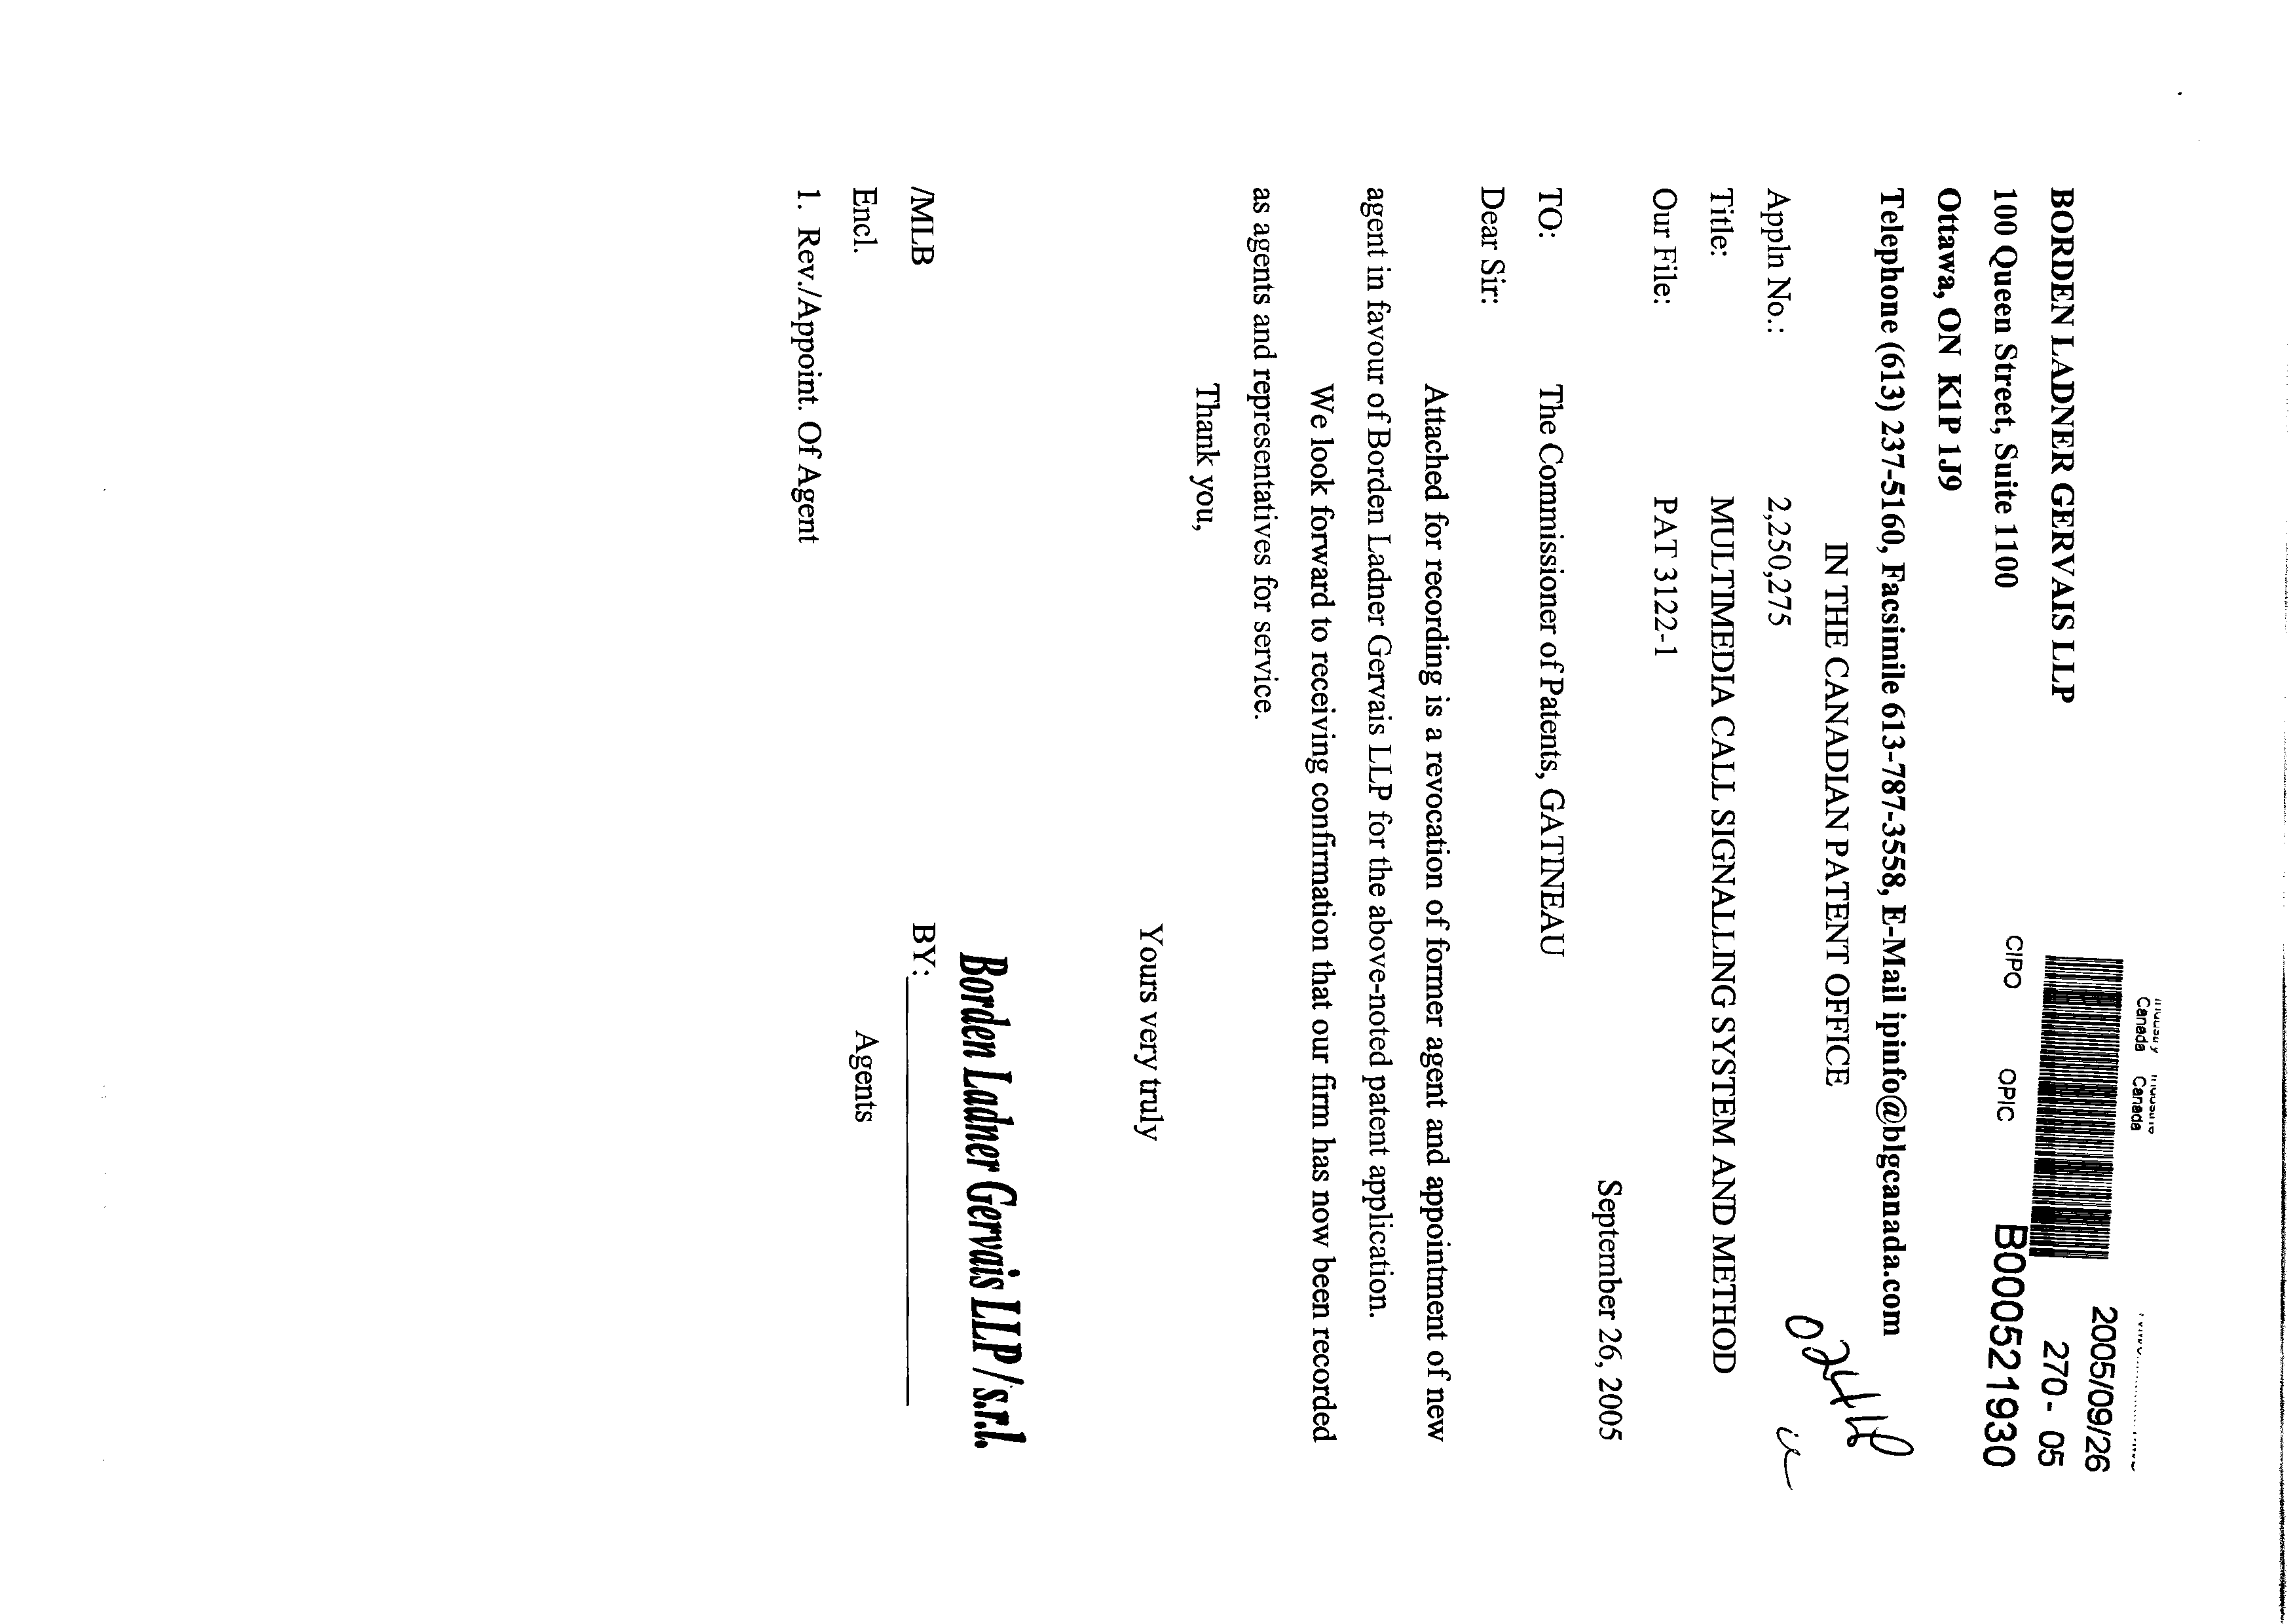 Canadian Patent Document 2250275. Correspondence 20041226. Image 1 of 2